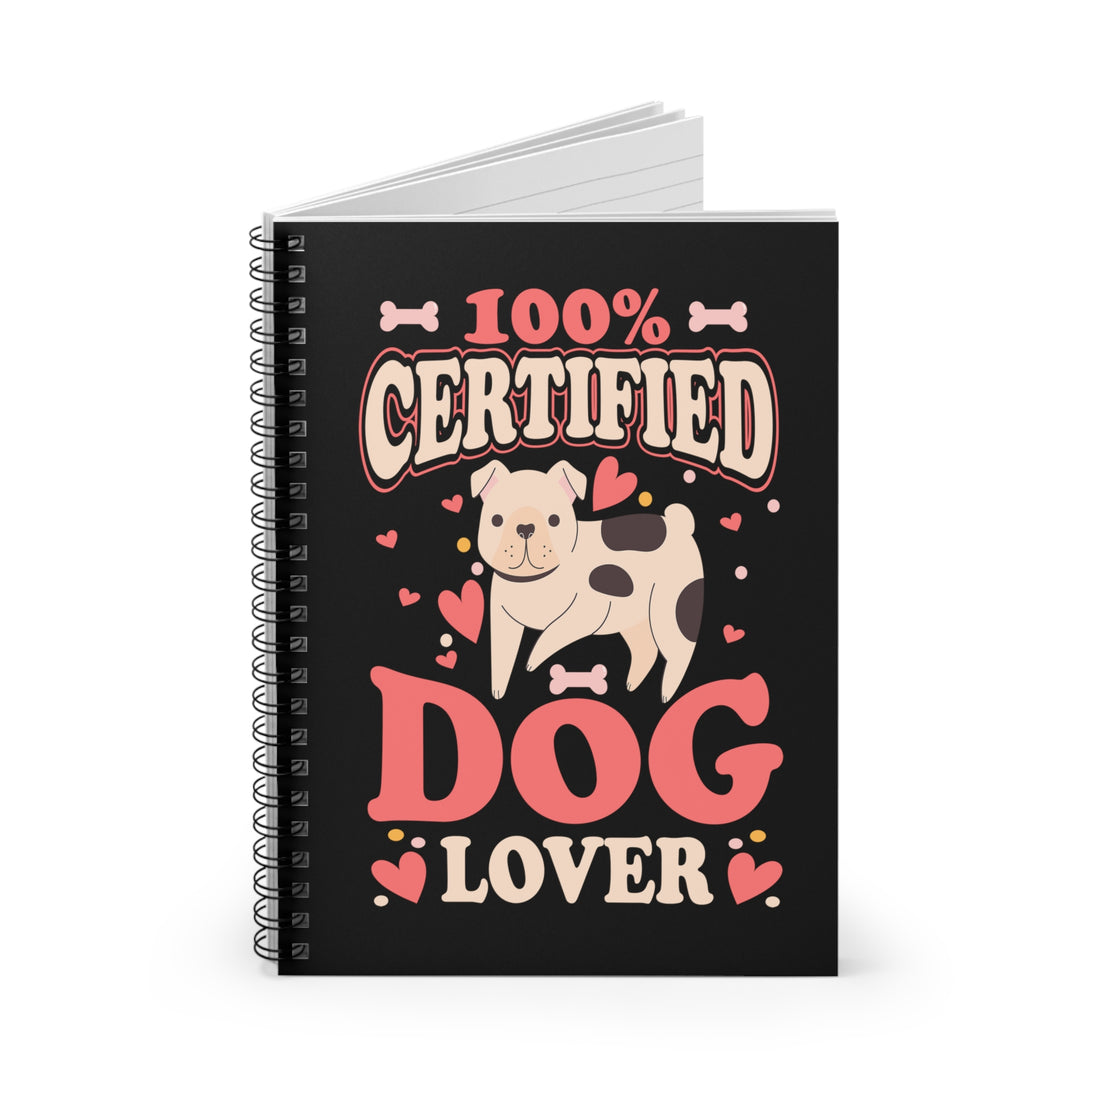 100% Certified Dog Lover - Spiral Notebook - Ruled Line